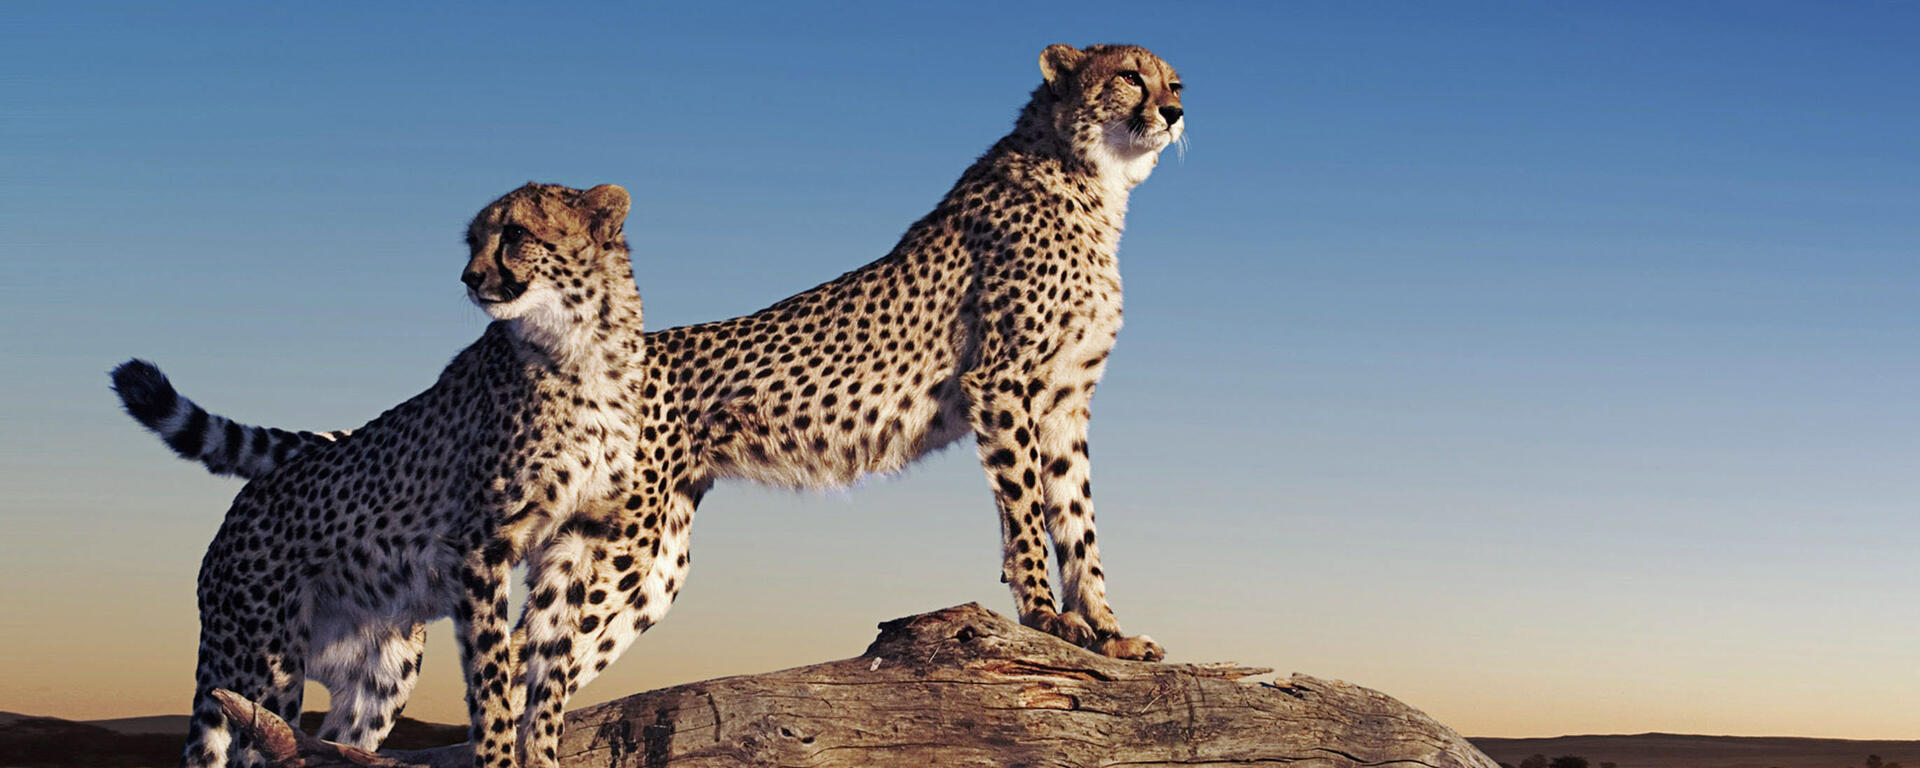 Cheetah's